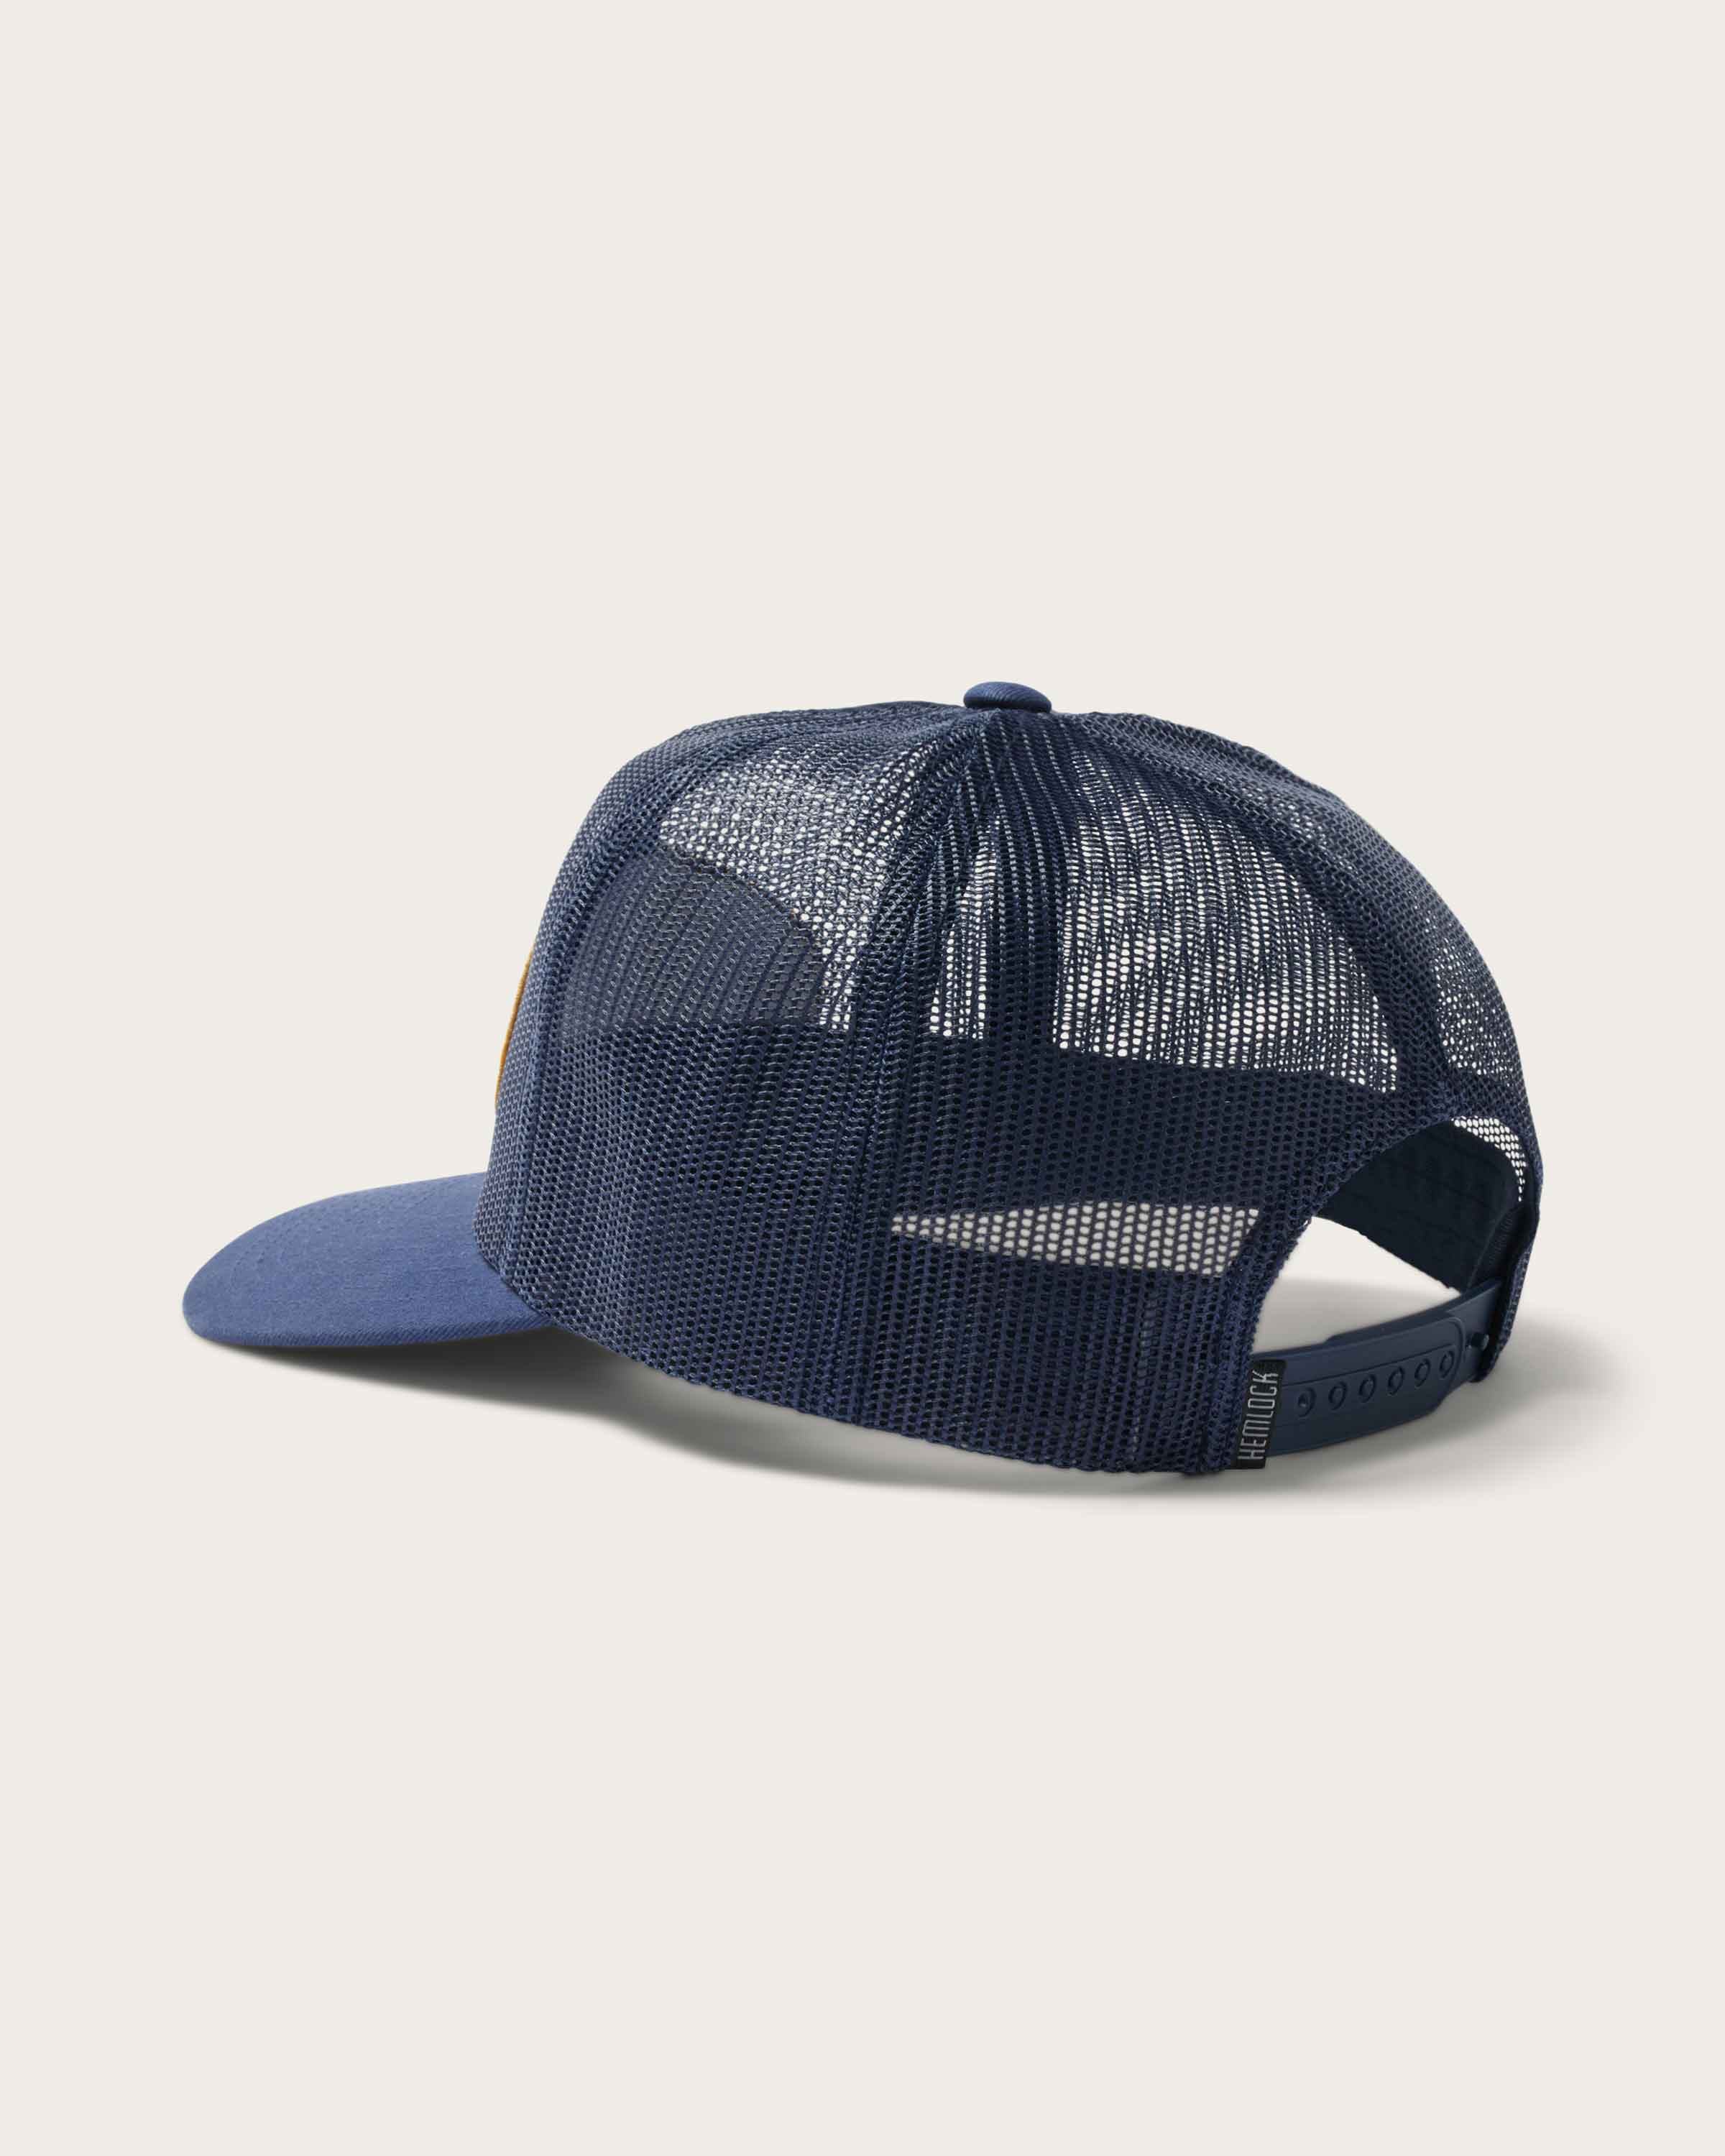 Mack Mesh Trucker Hat - undefined - Hemlock Hat Co. Ball Caps